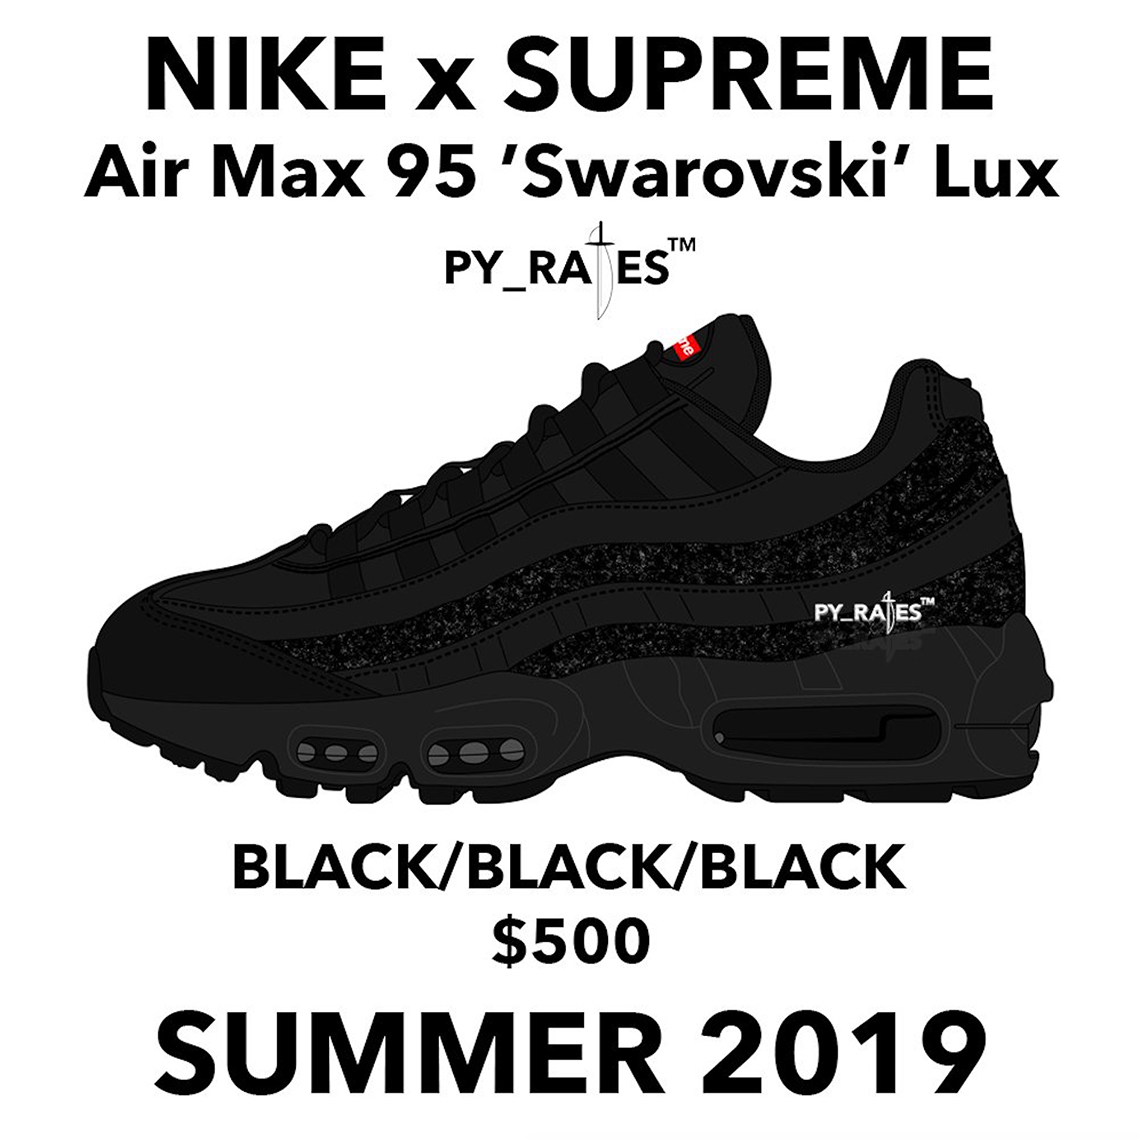 nike x supreme shoes price